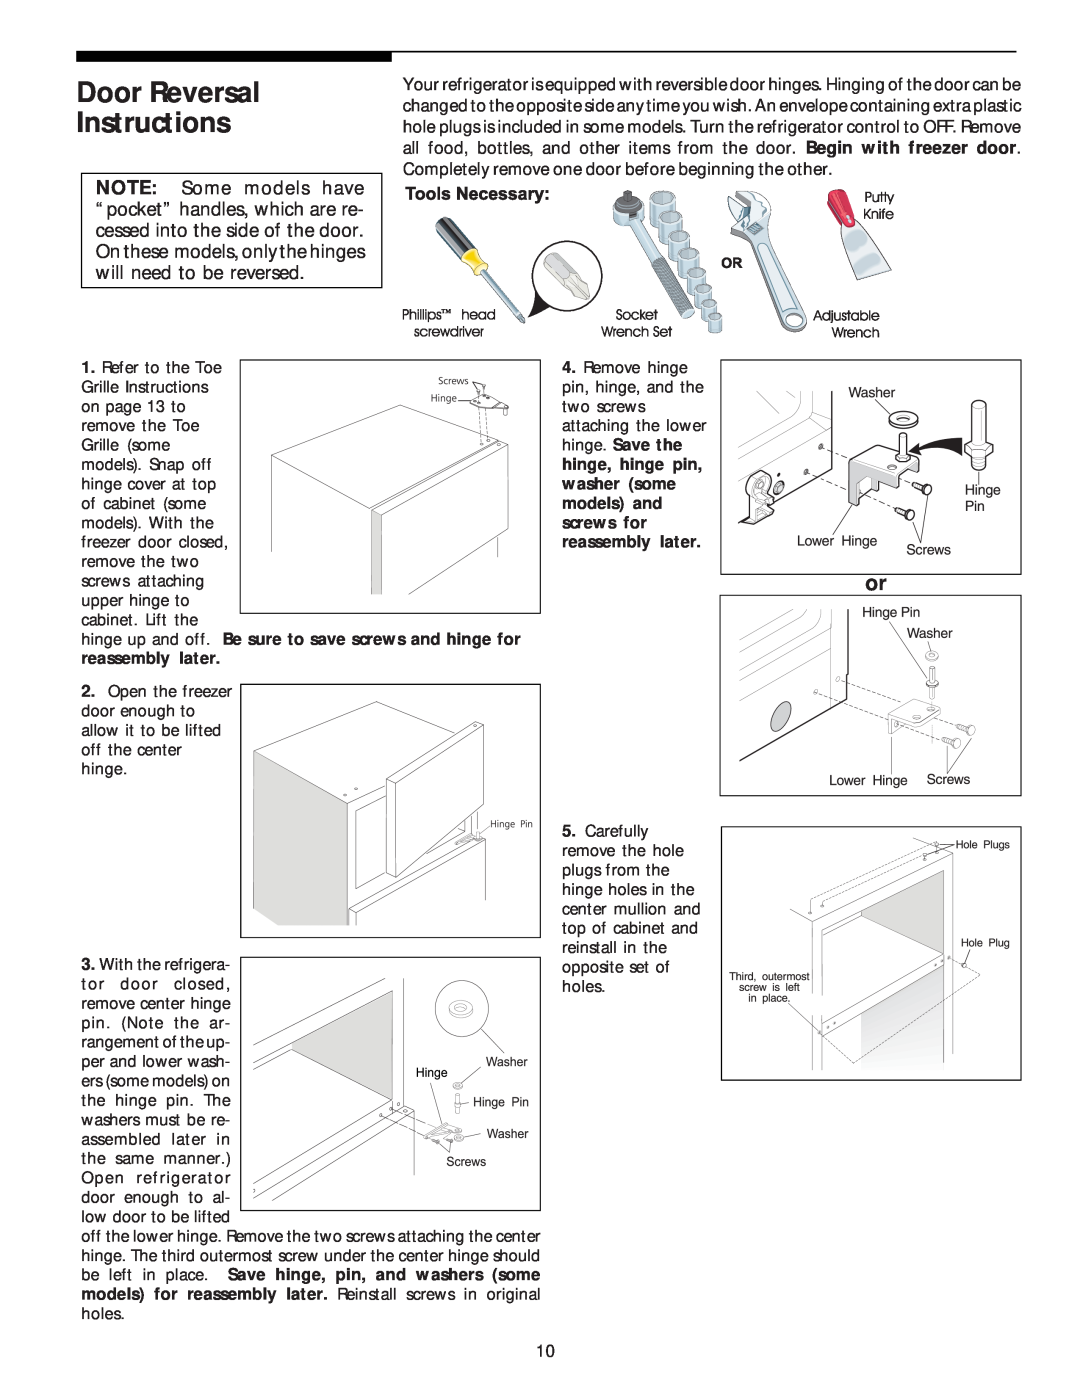 White-Westinghouse Top Freezer manual Door Reversal Instructions 